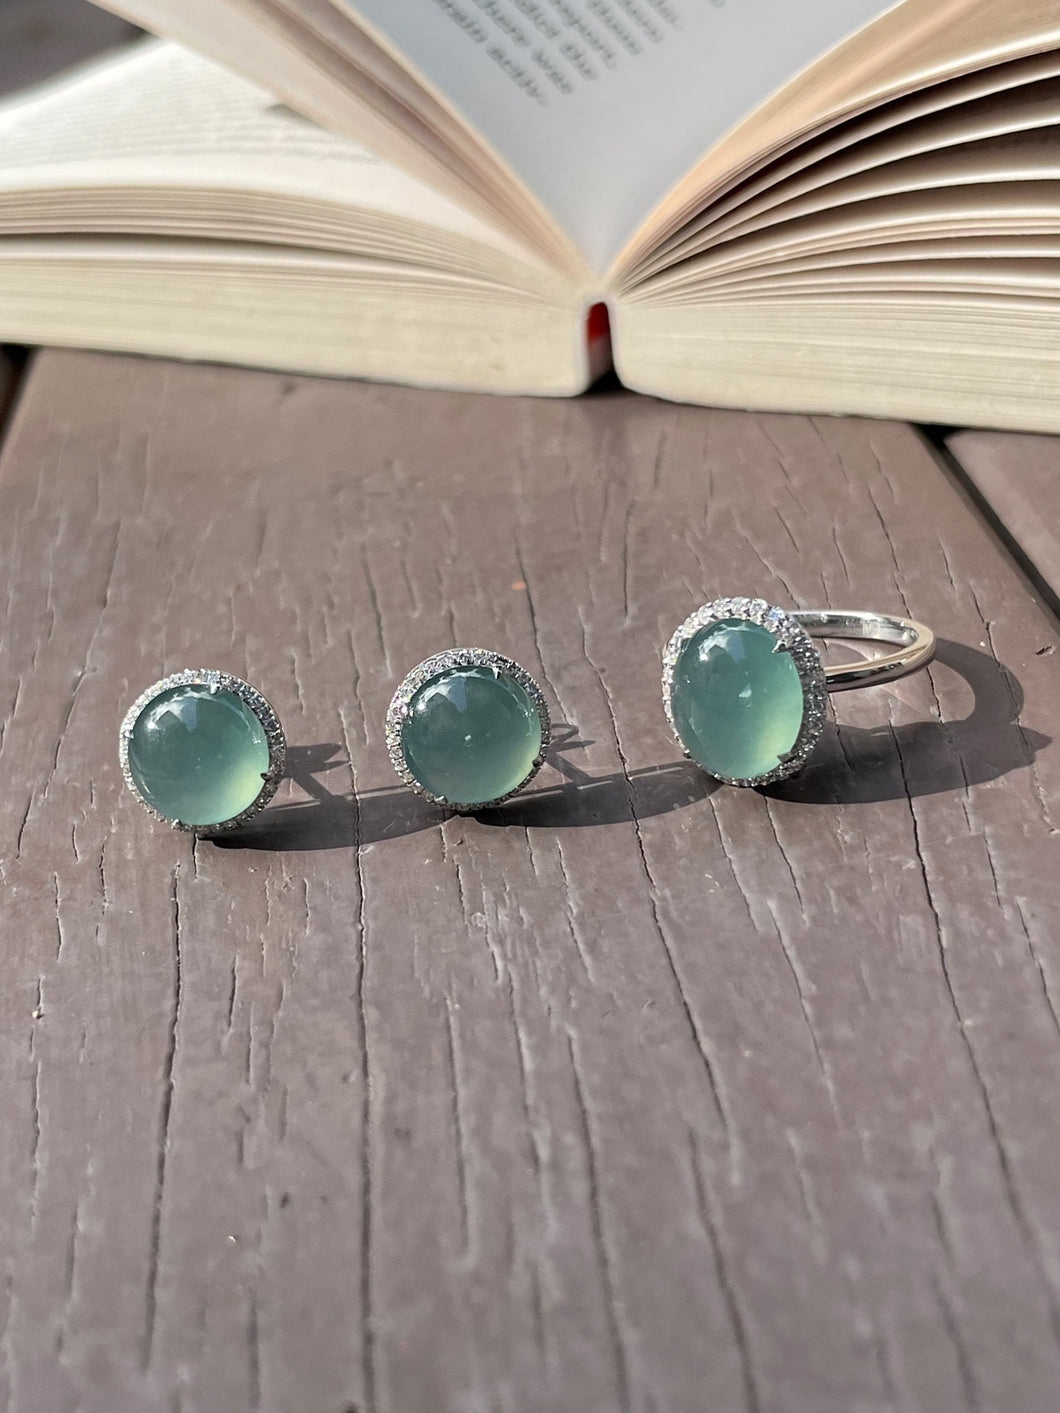 Icy Bluish-green Jadeite Cabochon Ring + Earrings (NJS001)